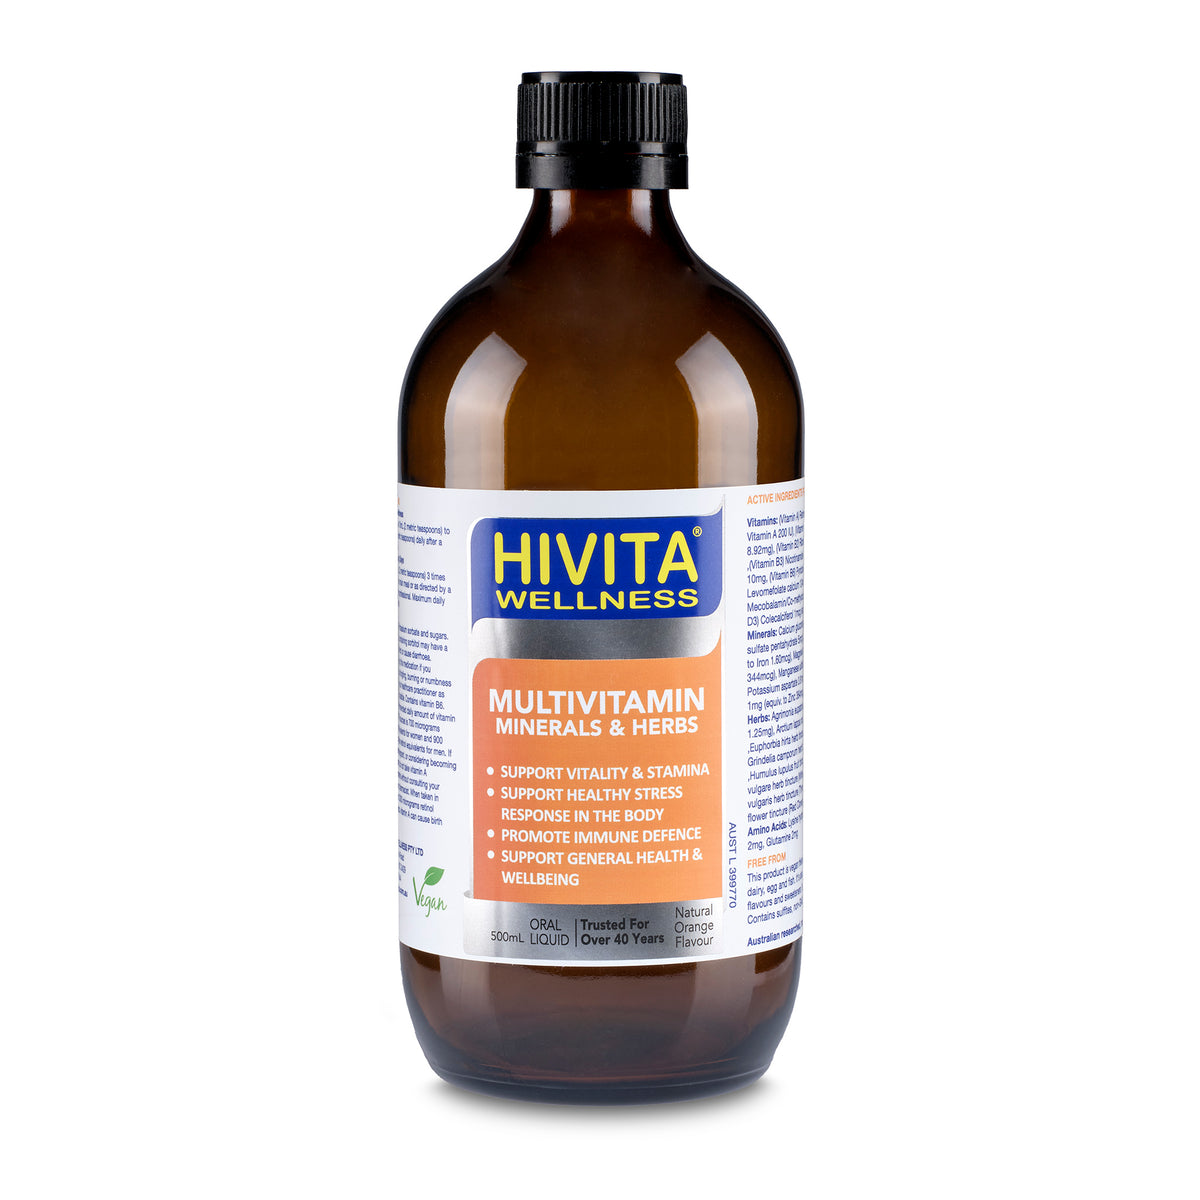 Hivita Multivitamin Minerals and Herbs